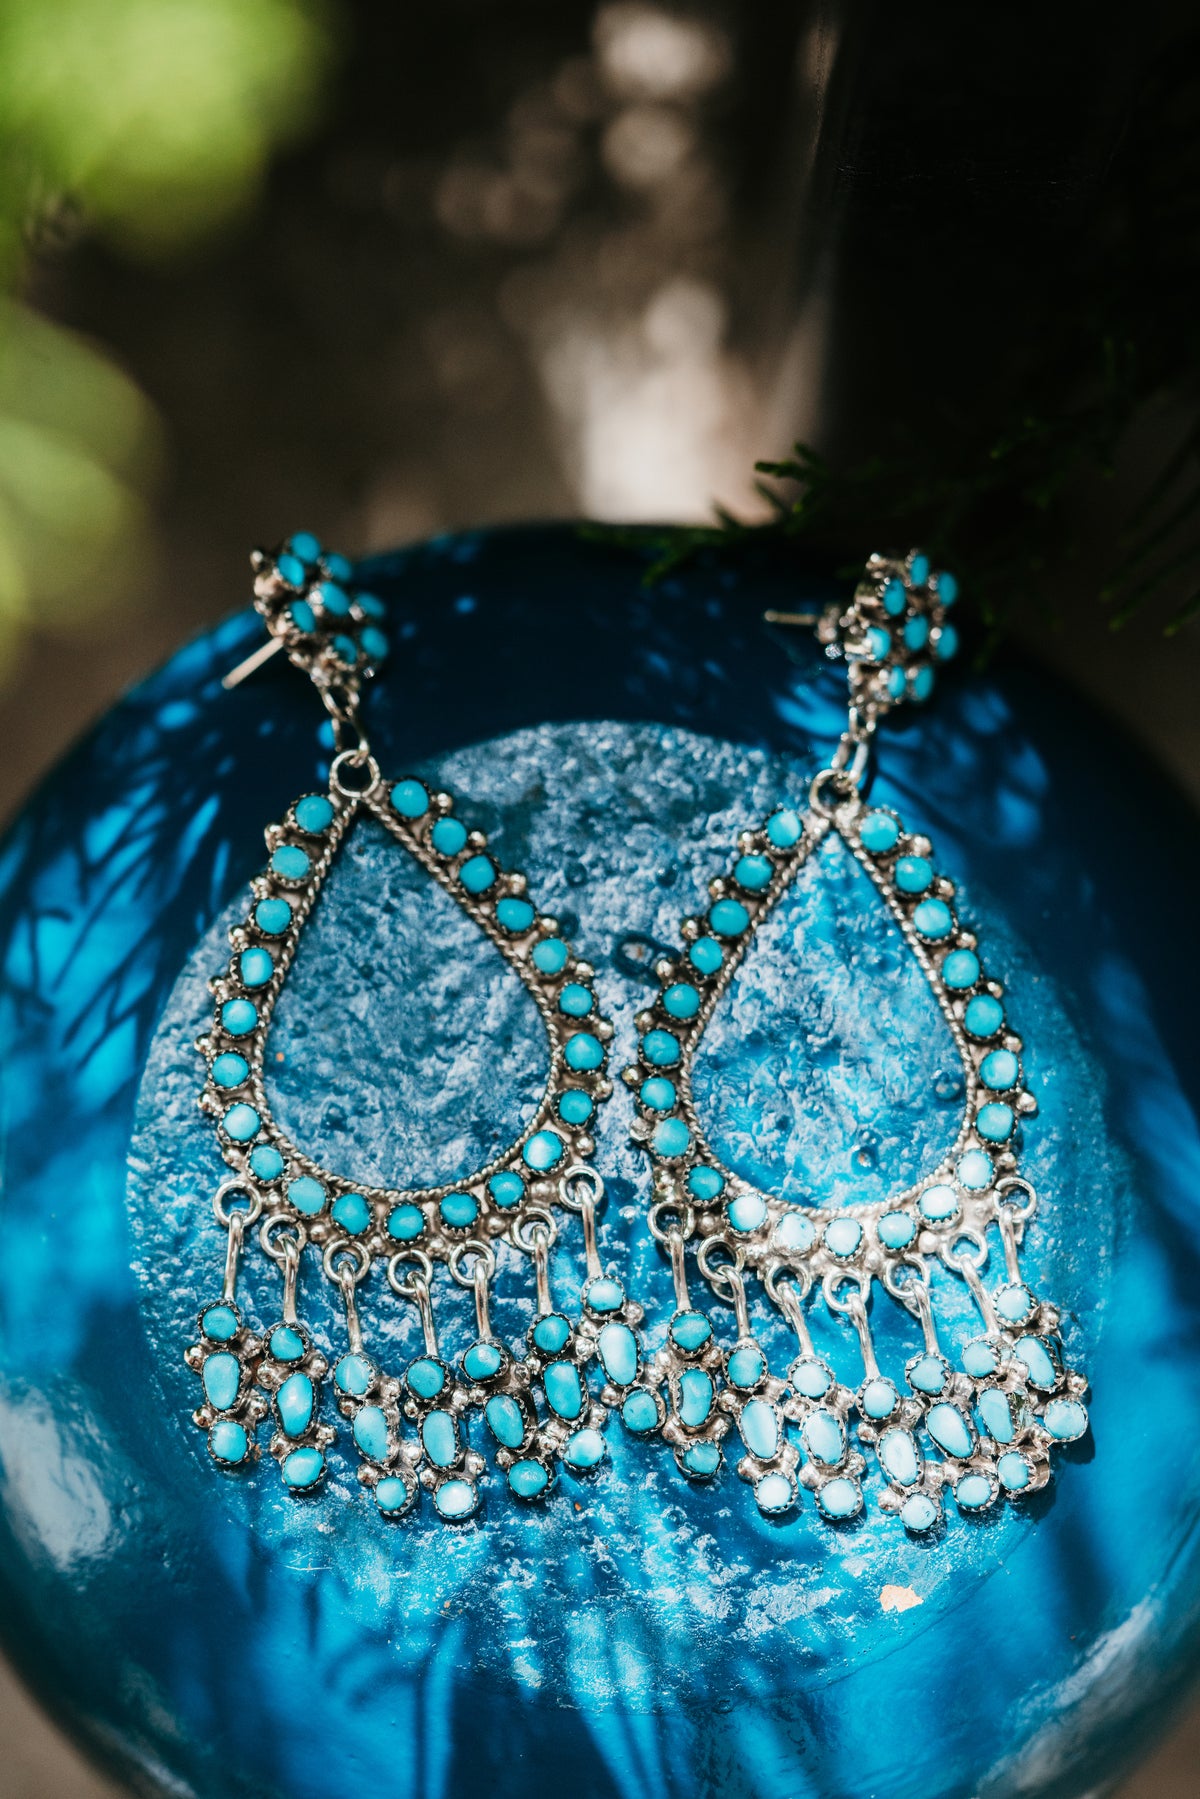 Kay Earrings | Turquoise